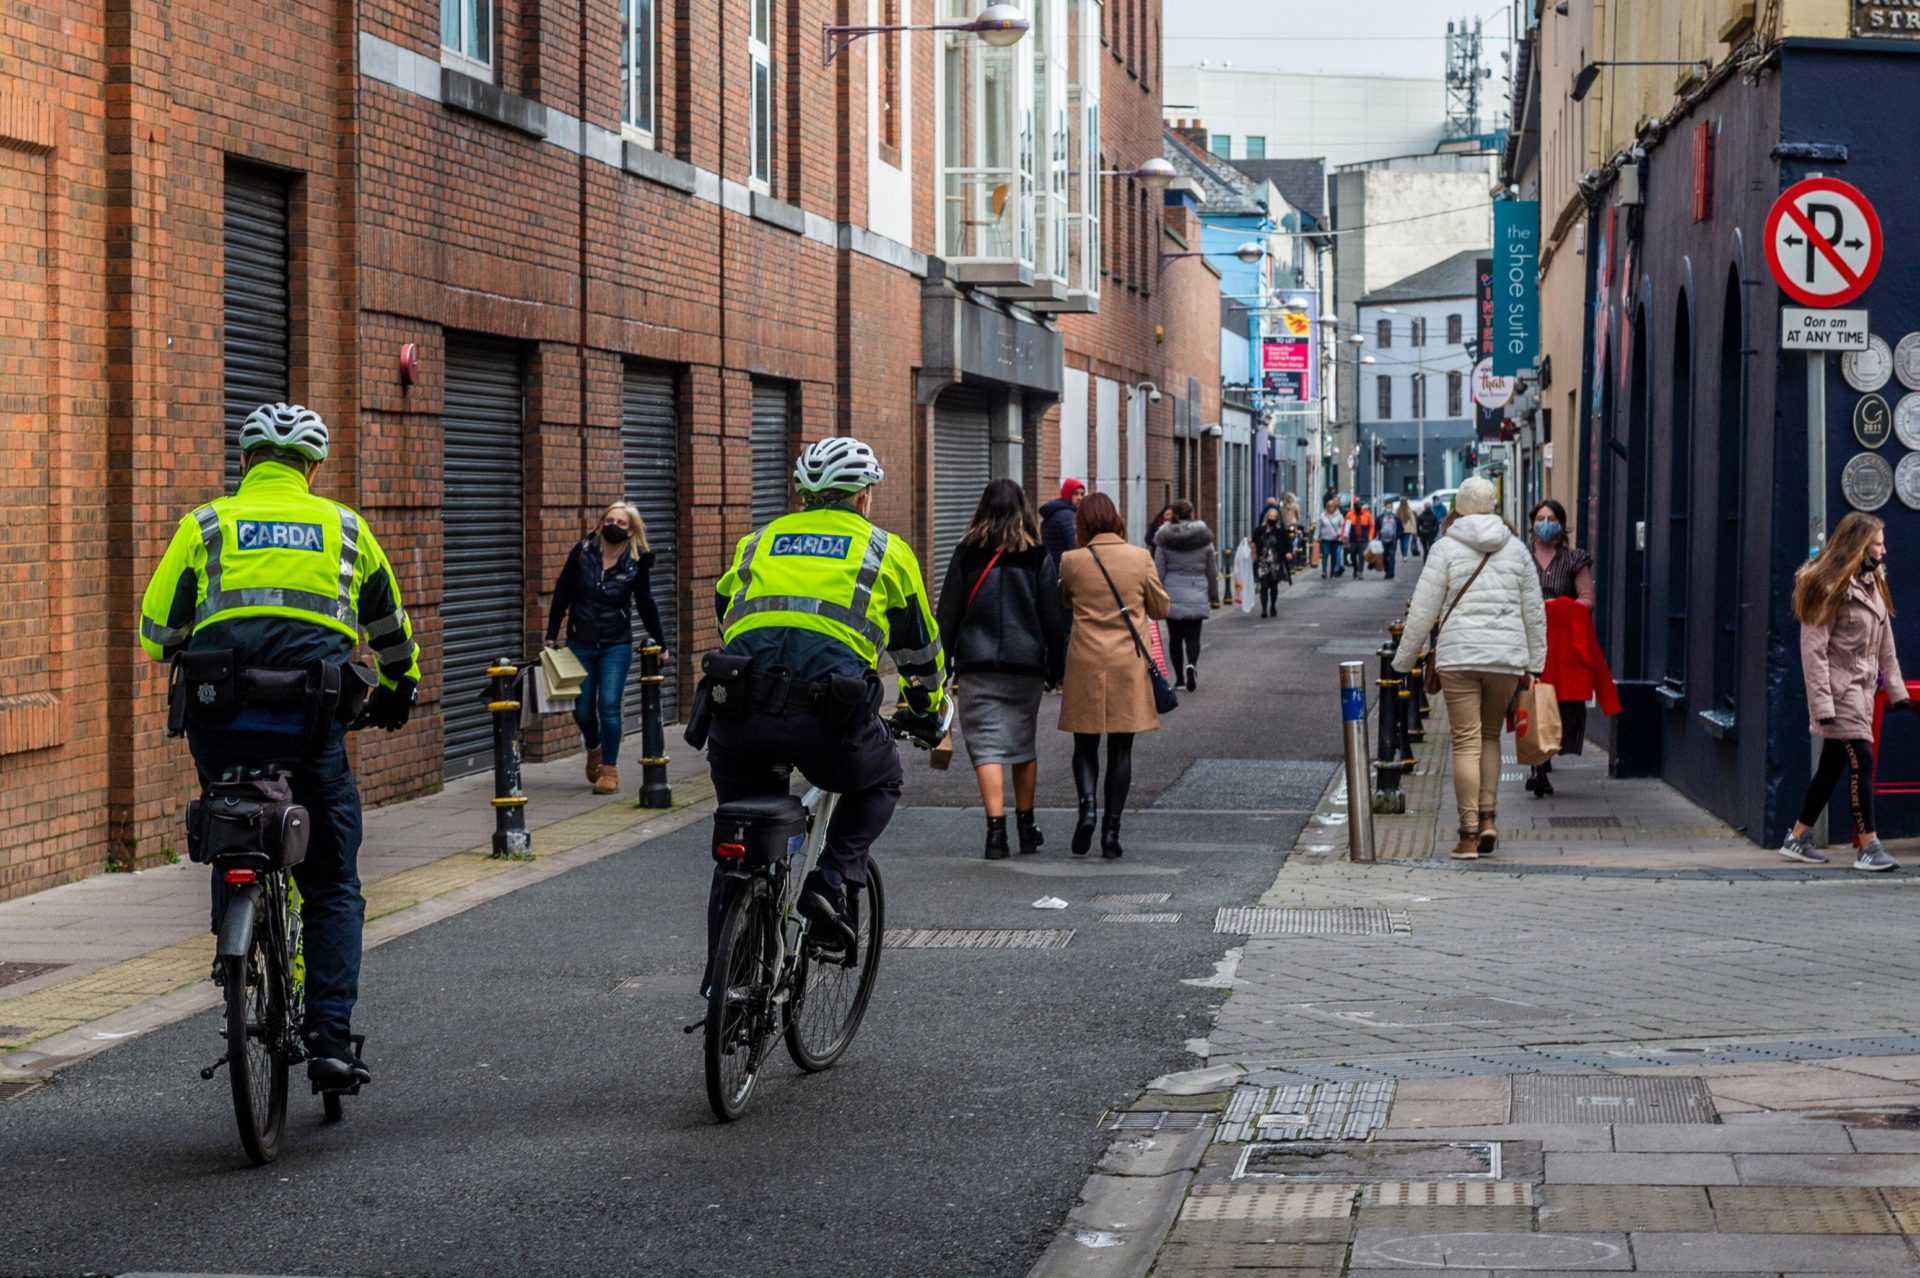 Gardaí on bikes patrol Maylor Street in Cork city